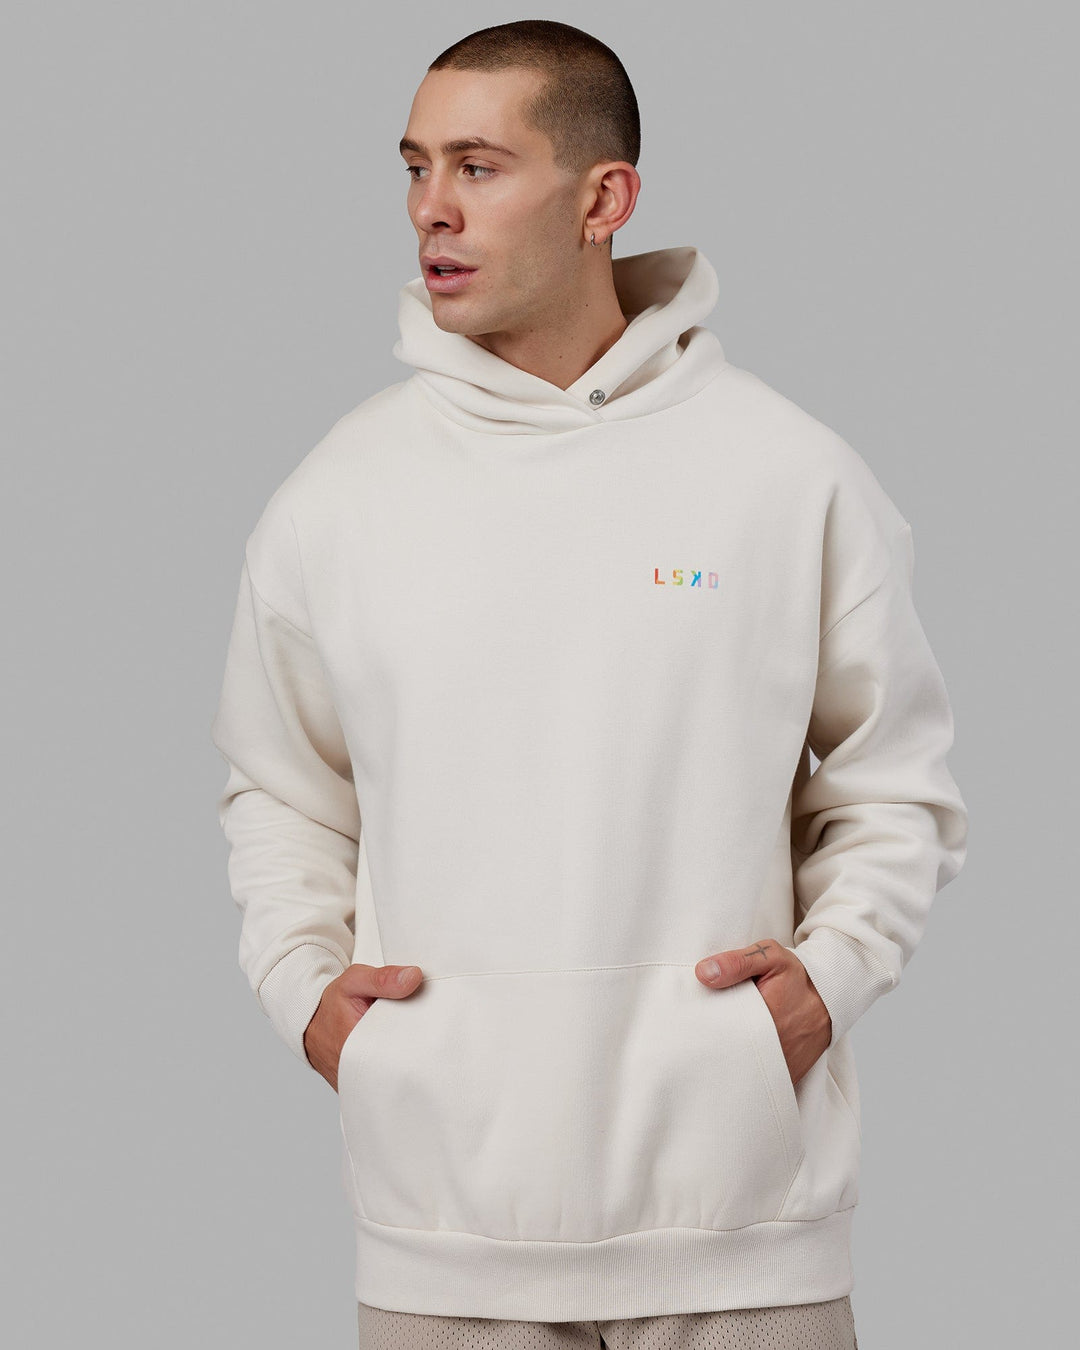 Man wearing Unisex Amplify Hoodie Oversize - Pride-Off White